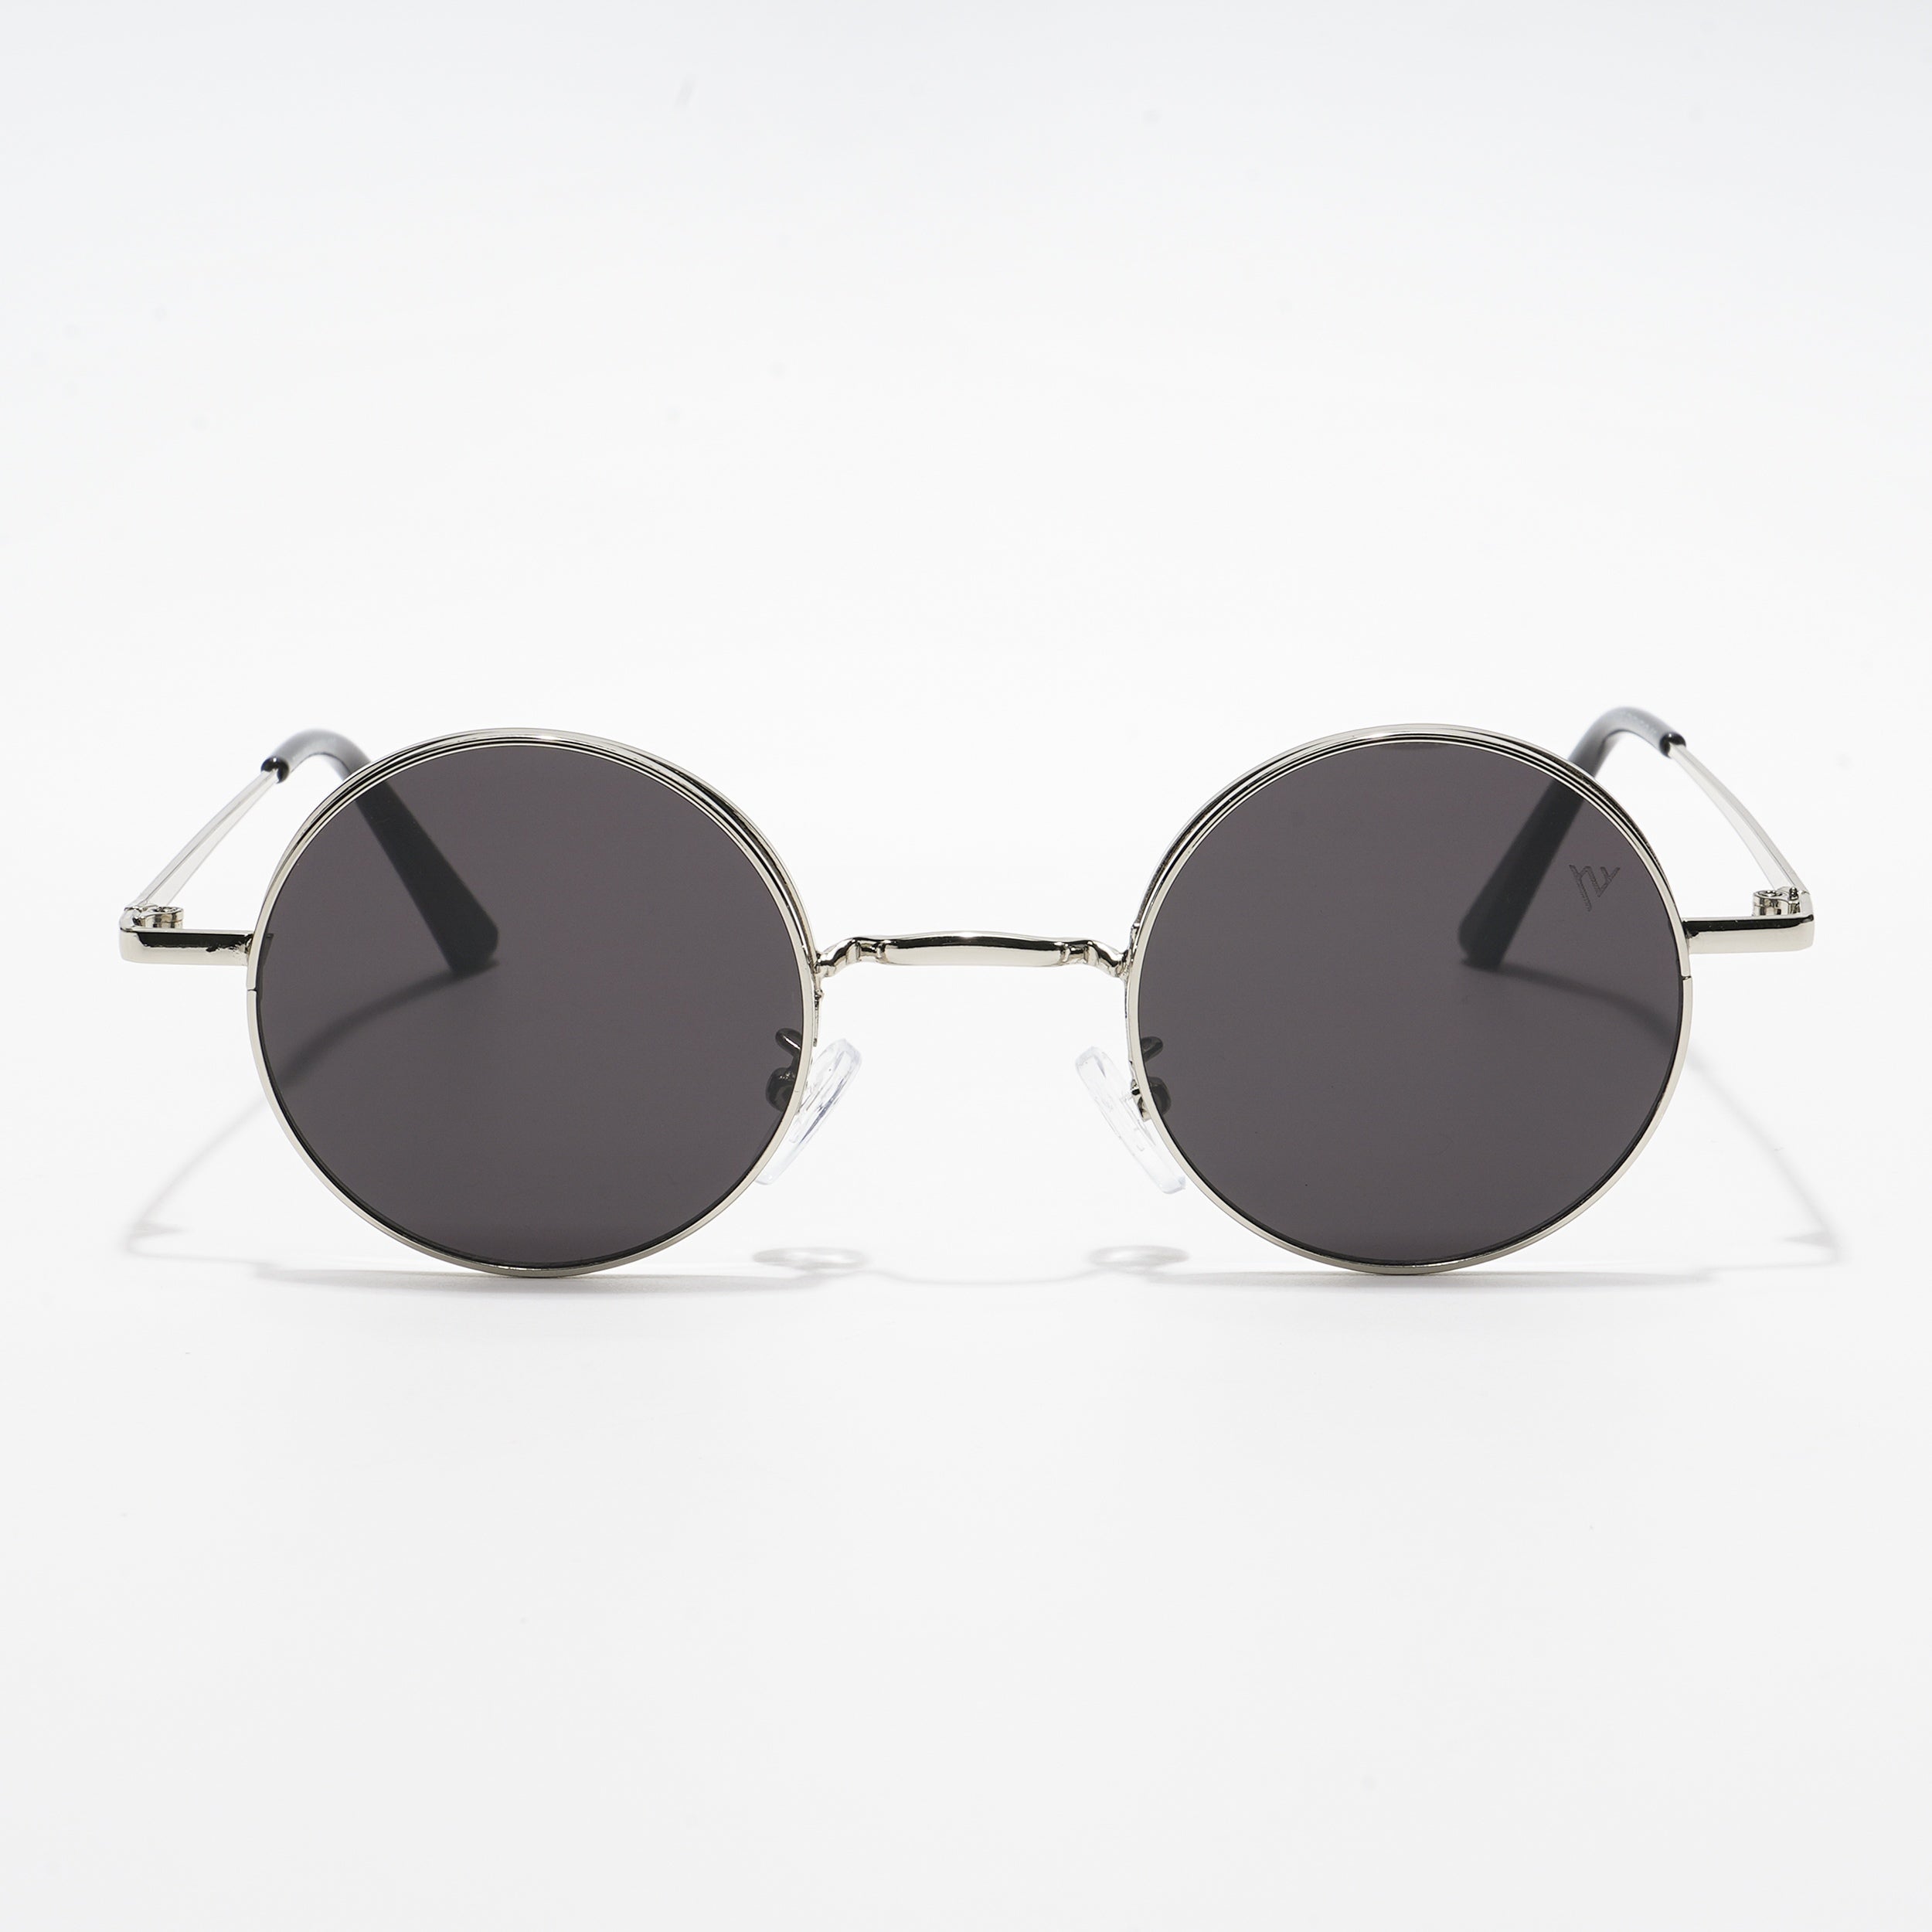 Voyage Black Silver Round Sunglasses - MG3504